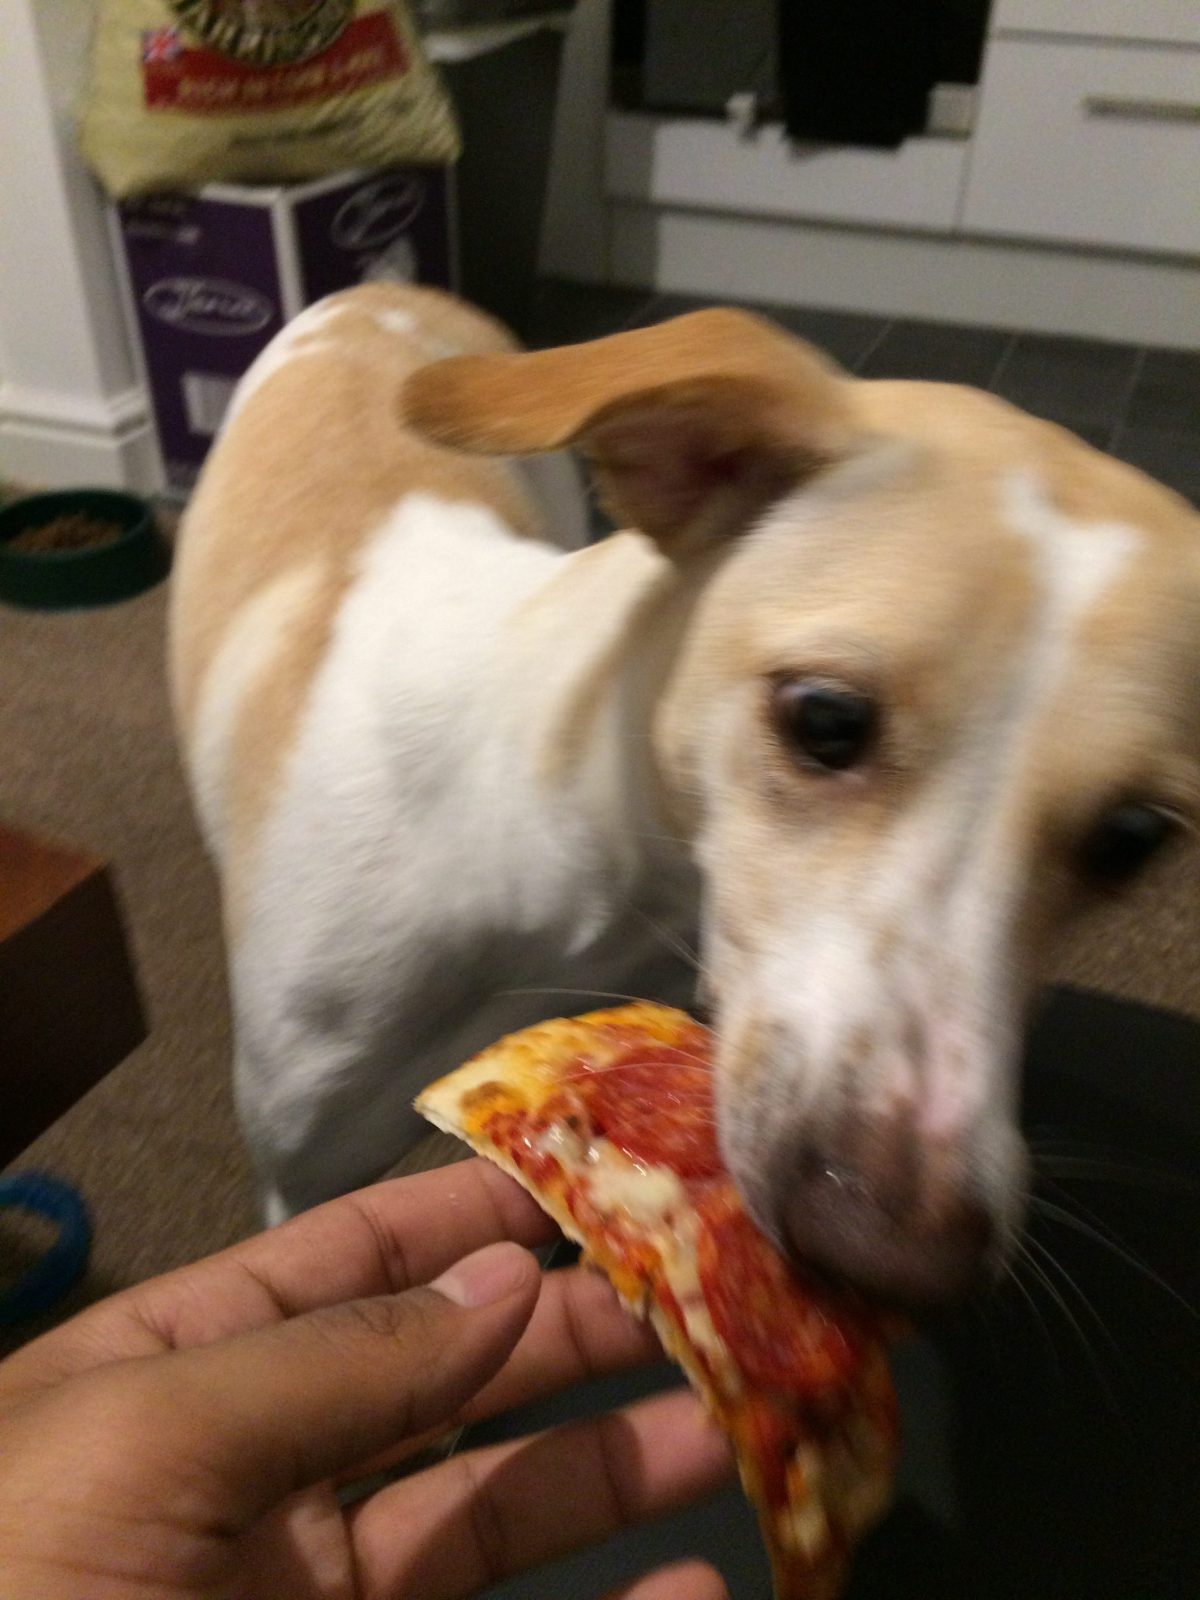 Zelda - I love pizza